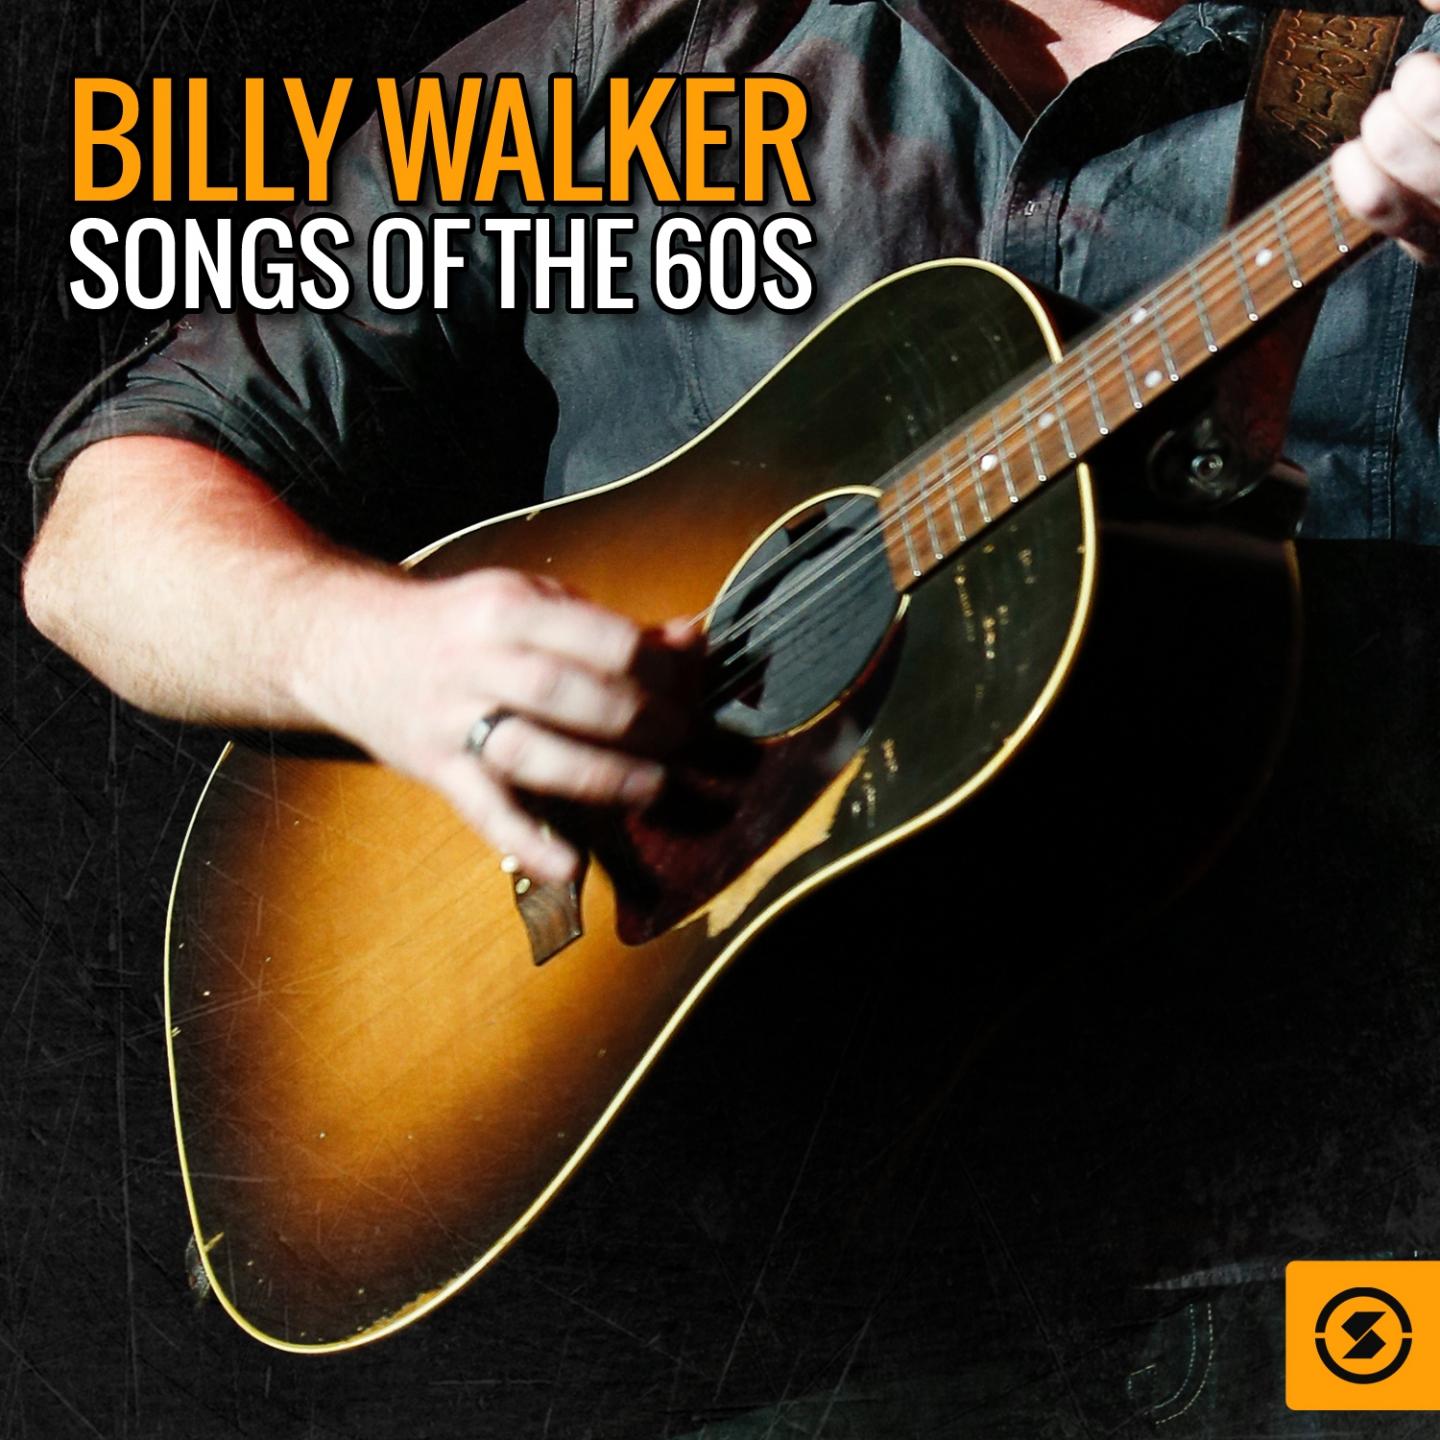 Billy Walker Songs of the 60s